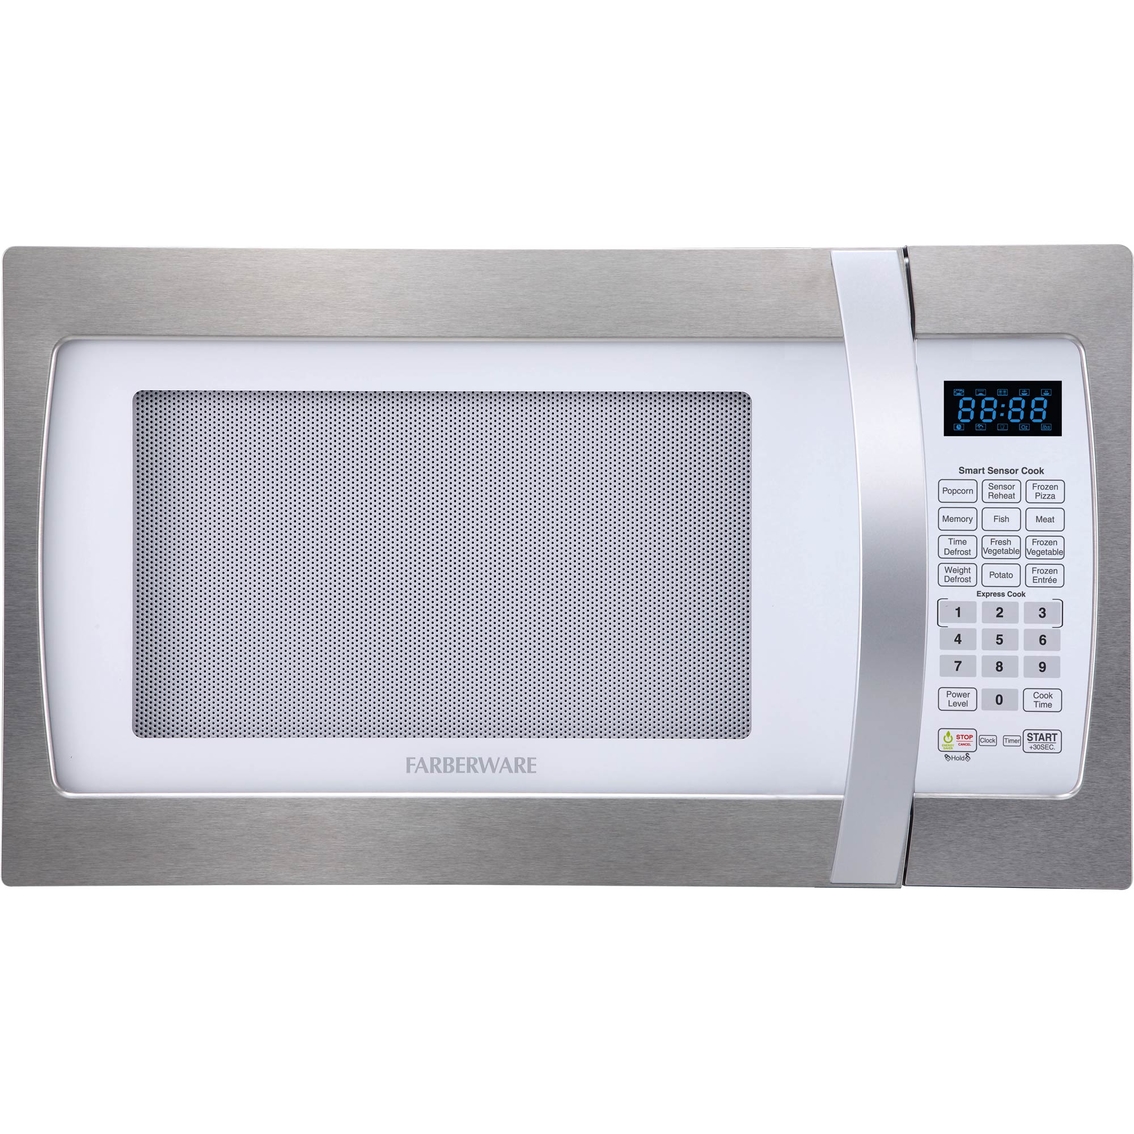 Farberware Professional 1.3 cu. ft. 1100 Watt Microwave Oven